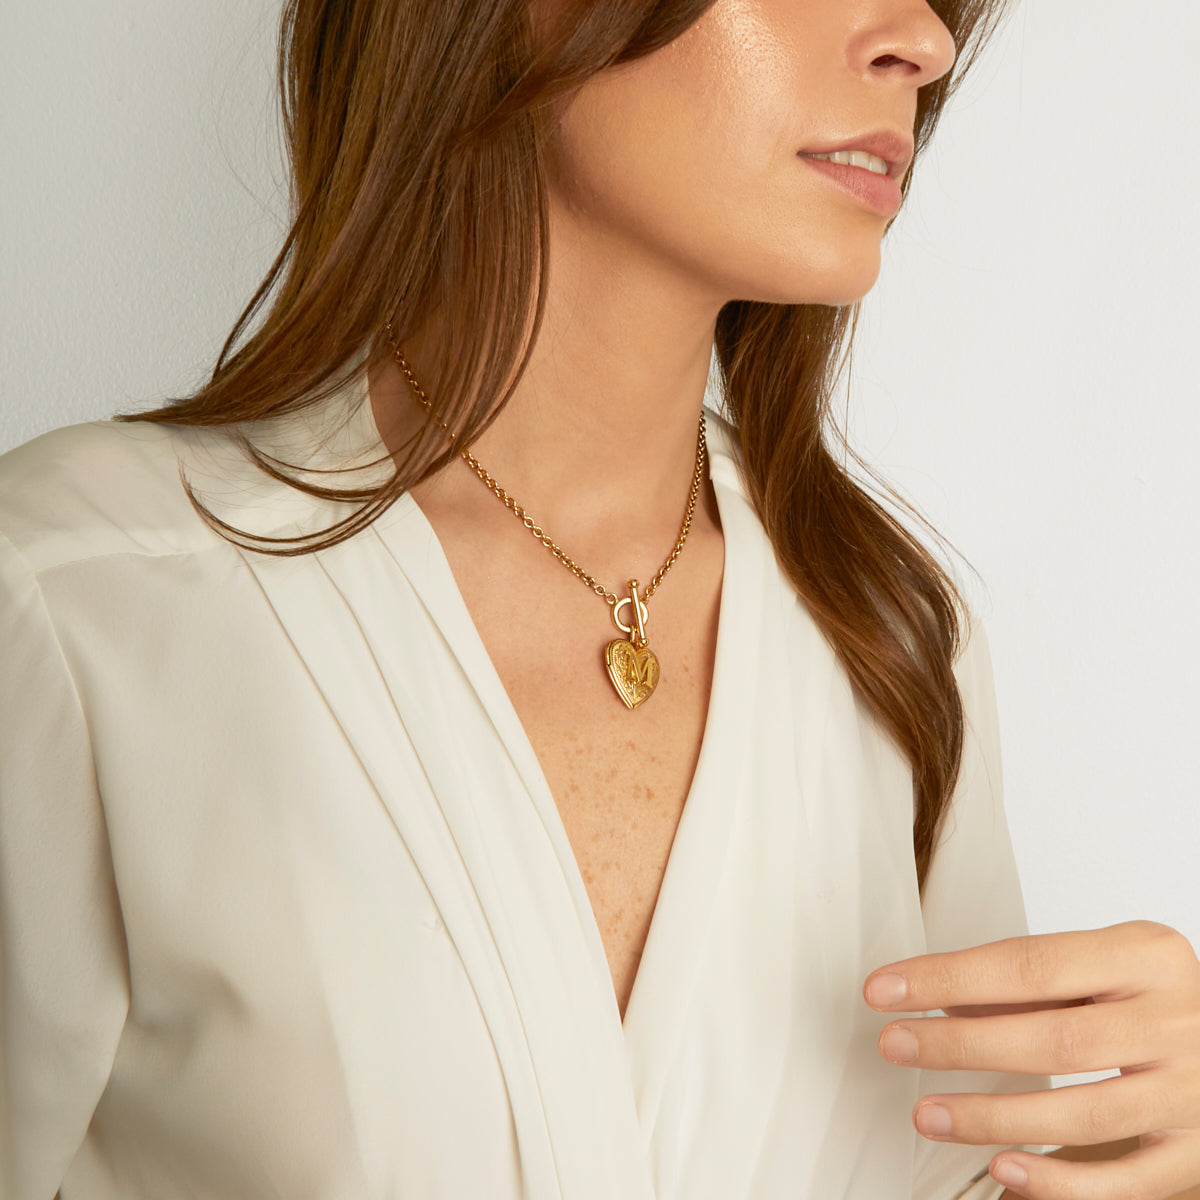 Amazon.com: Kate Spade New York Gold-Tone Alphabet Pendant Necklace, 18